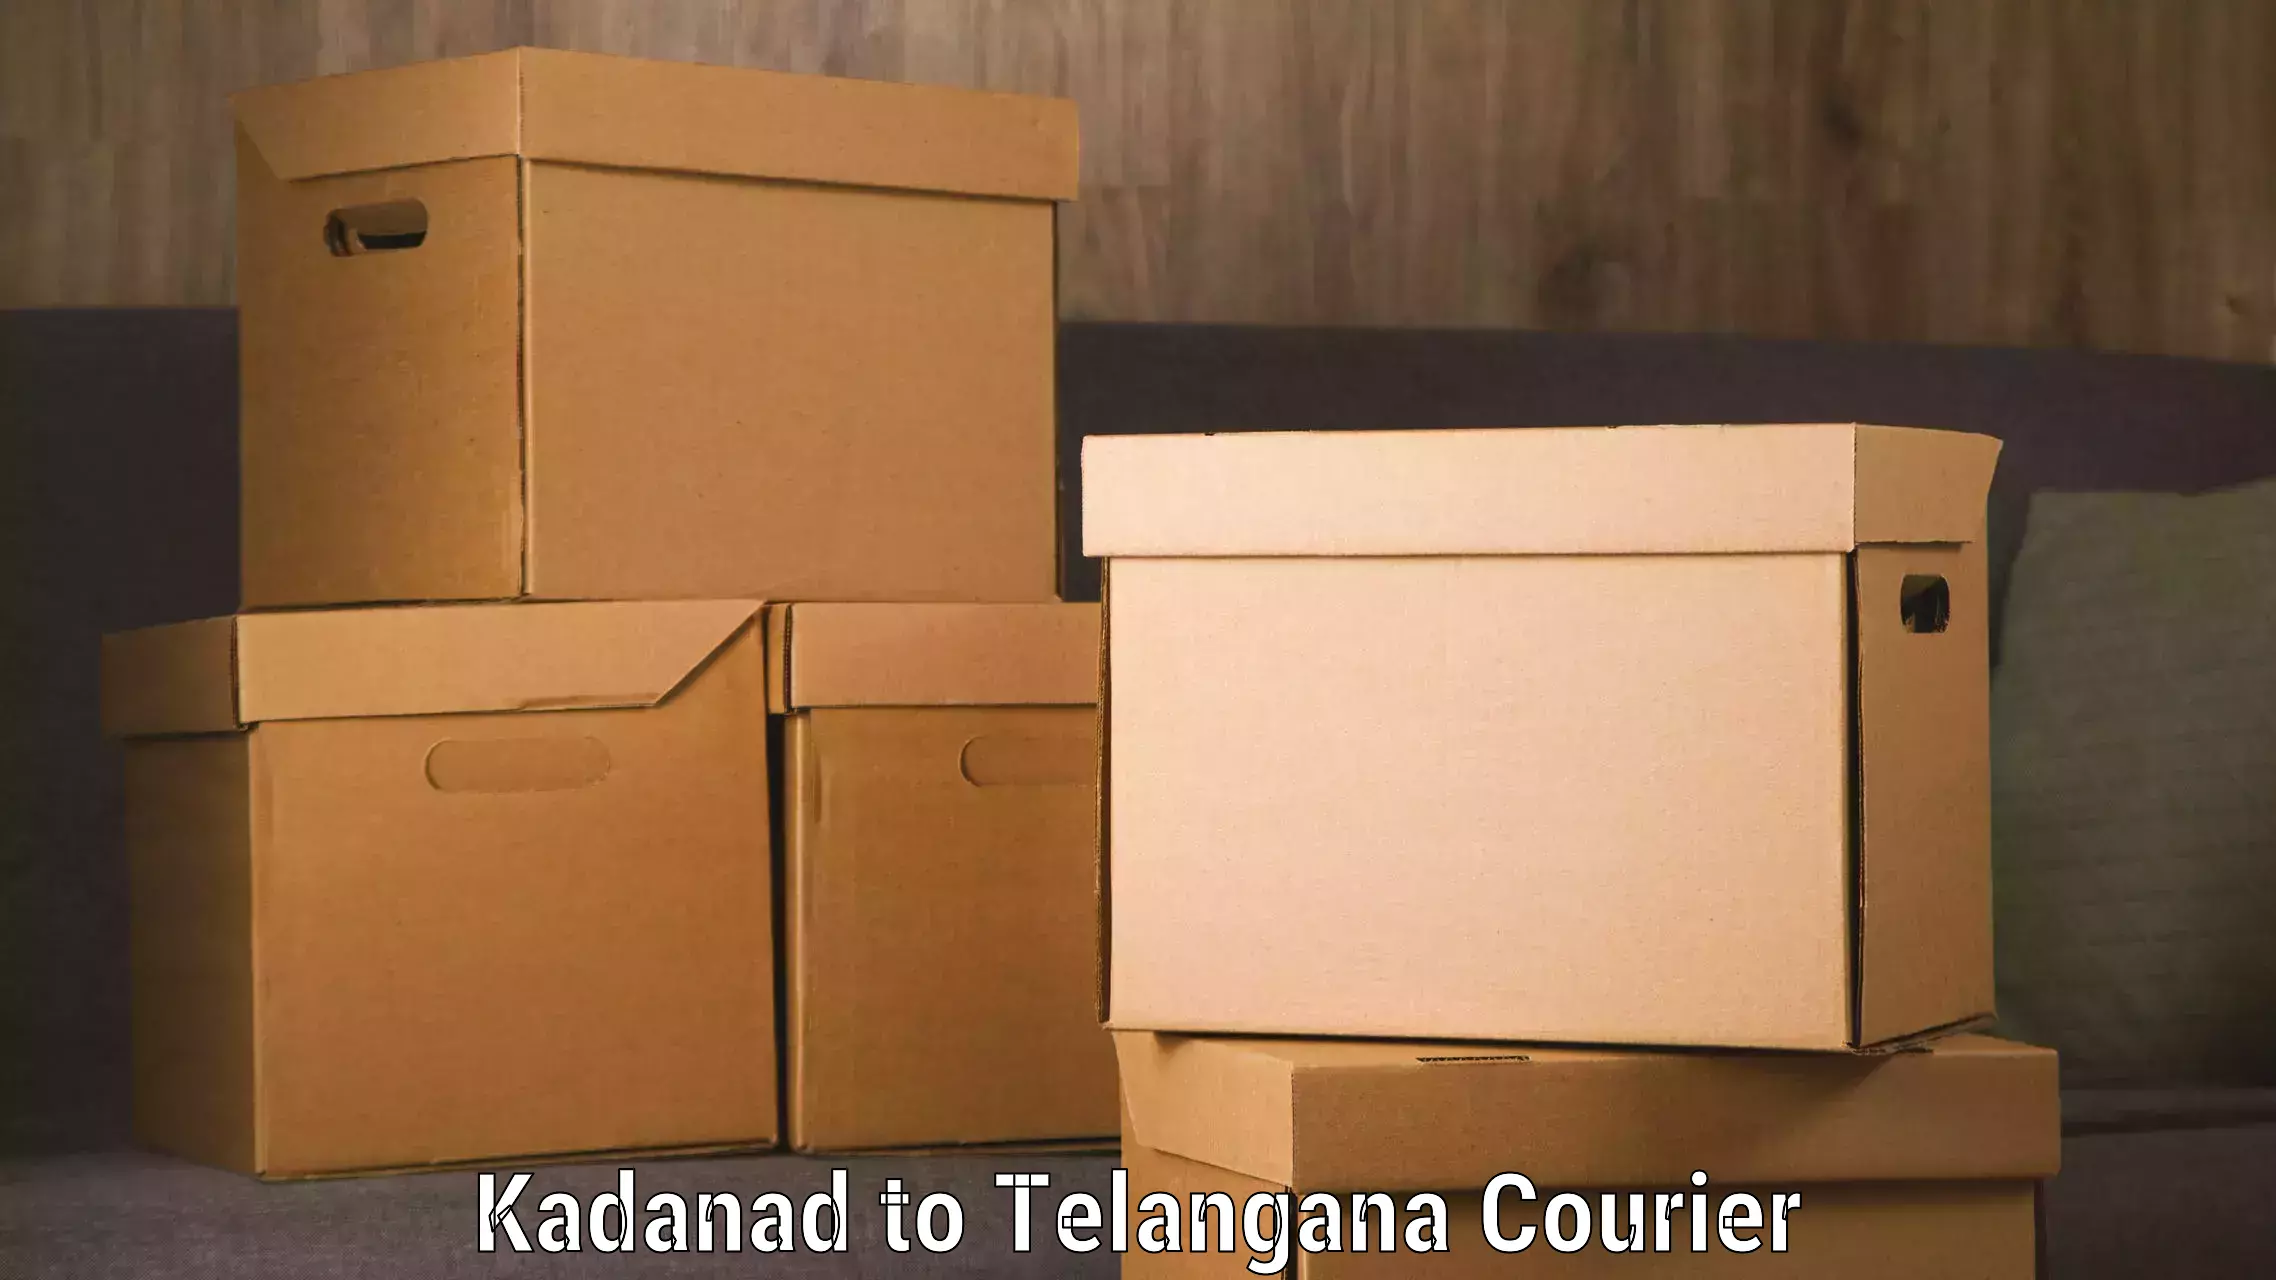 Enhanced tracking features Kadanad to Manneguda